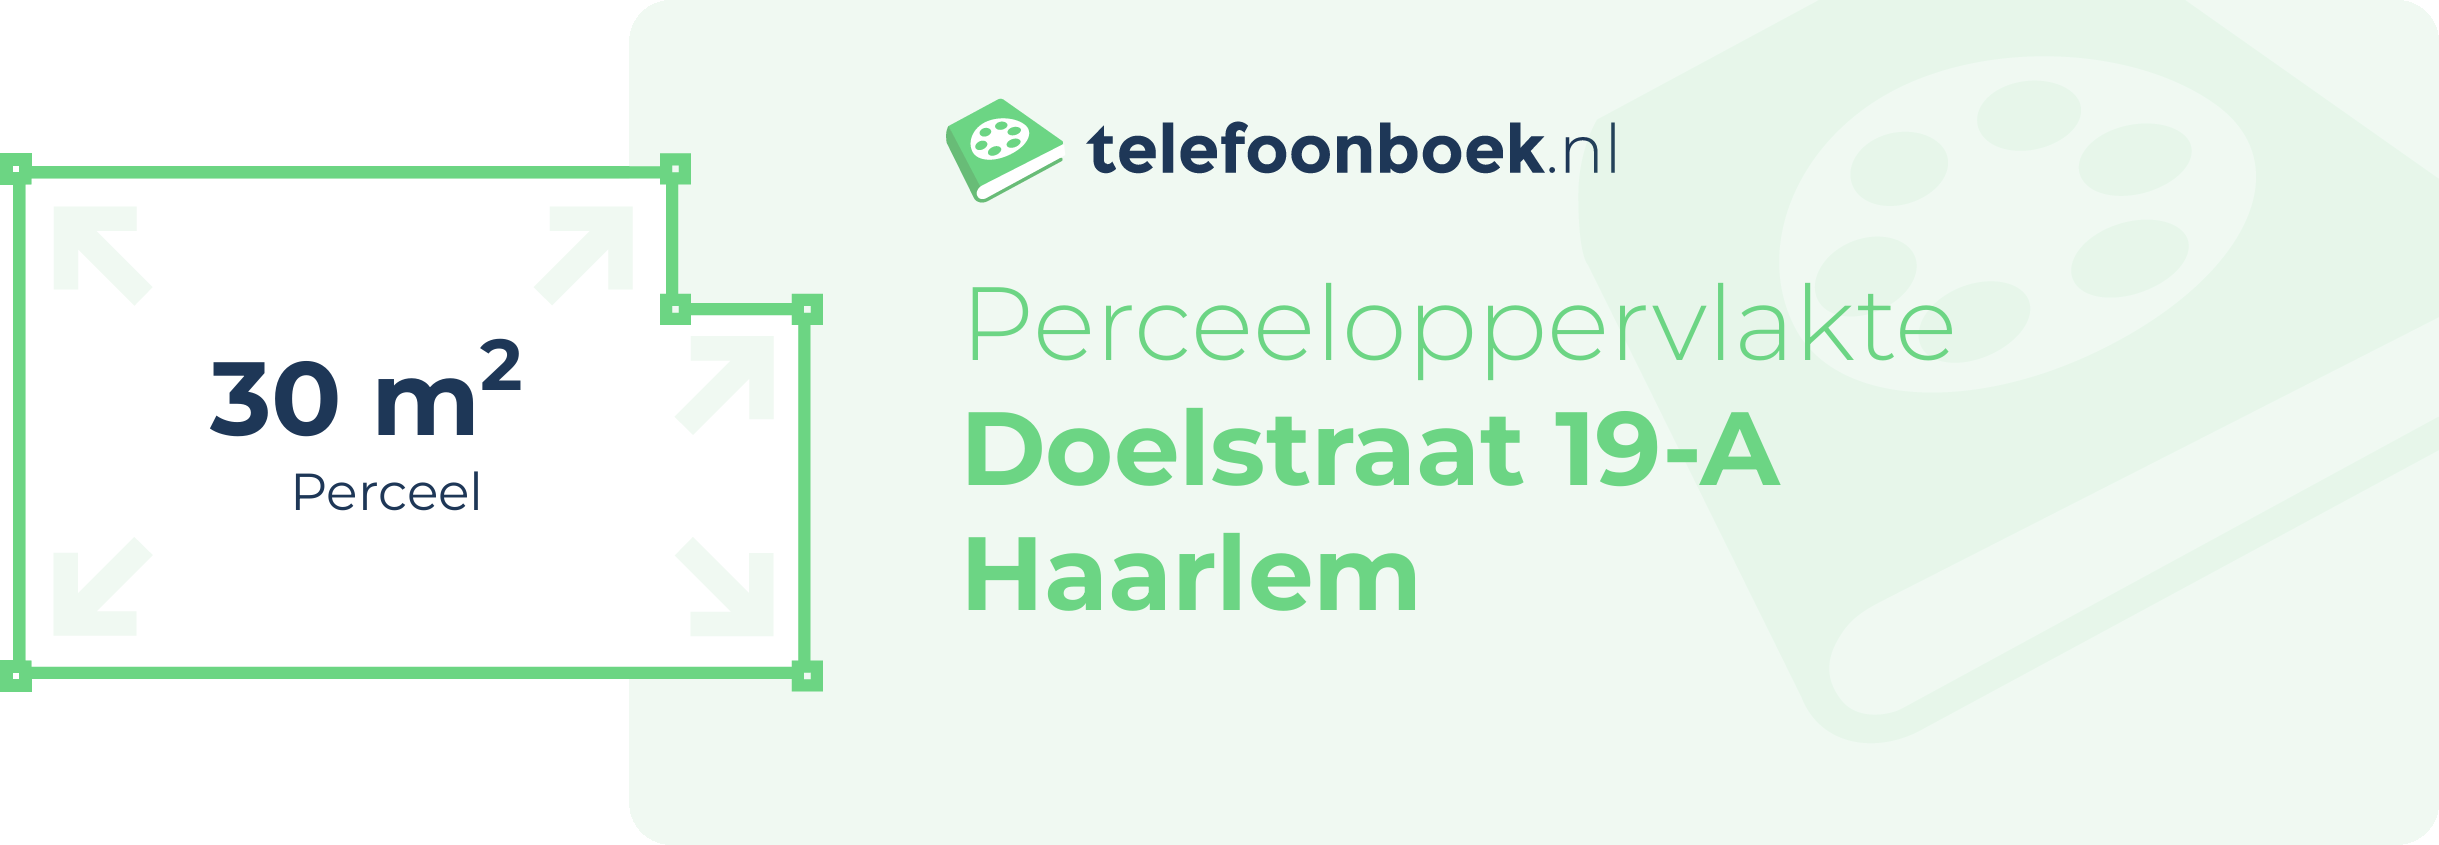 Perceeloppervlakte Doelstraat 19-A Haarlem